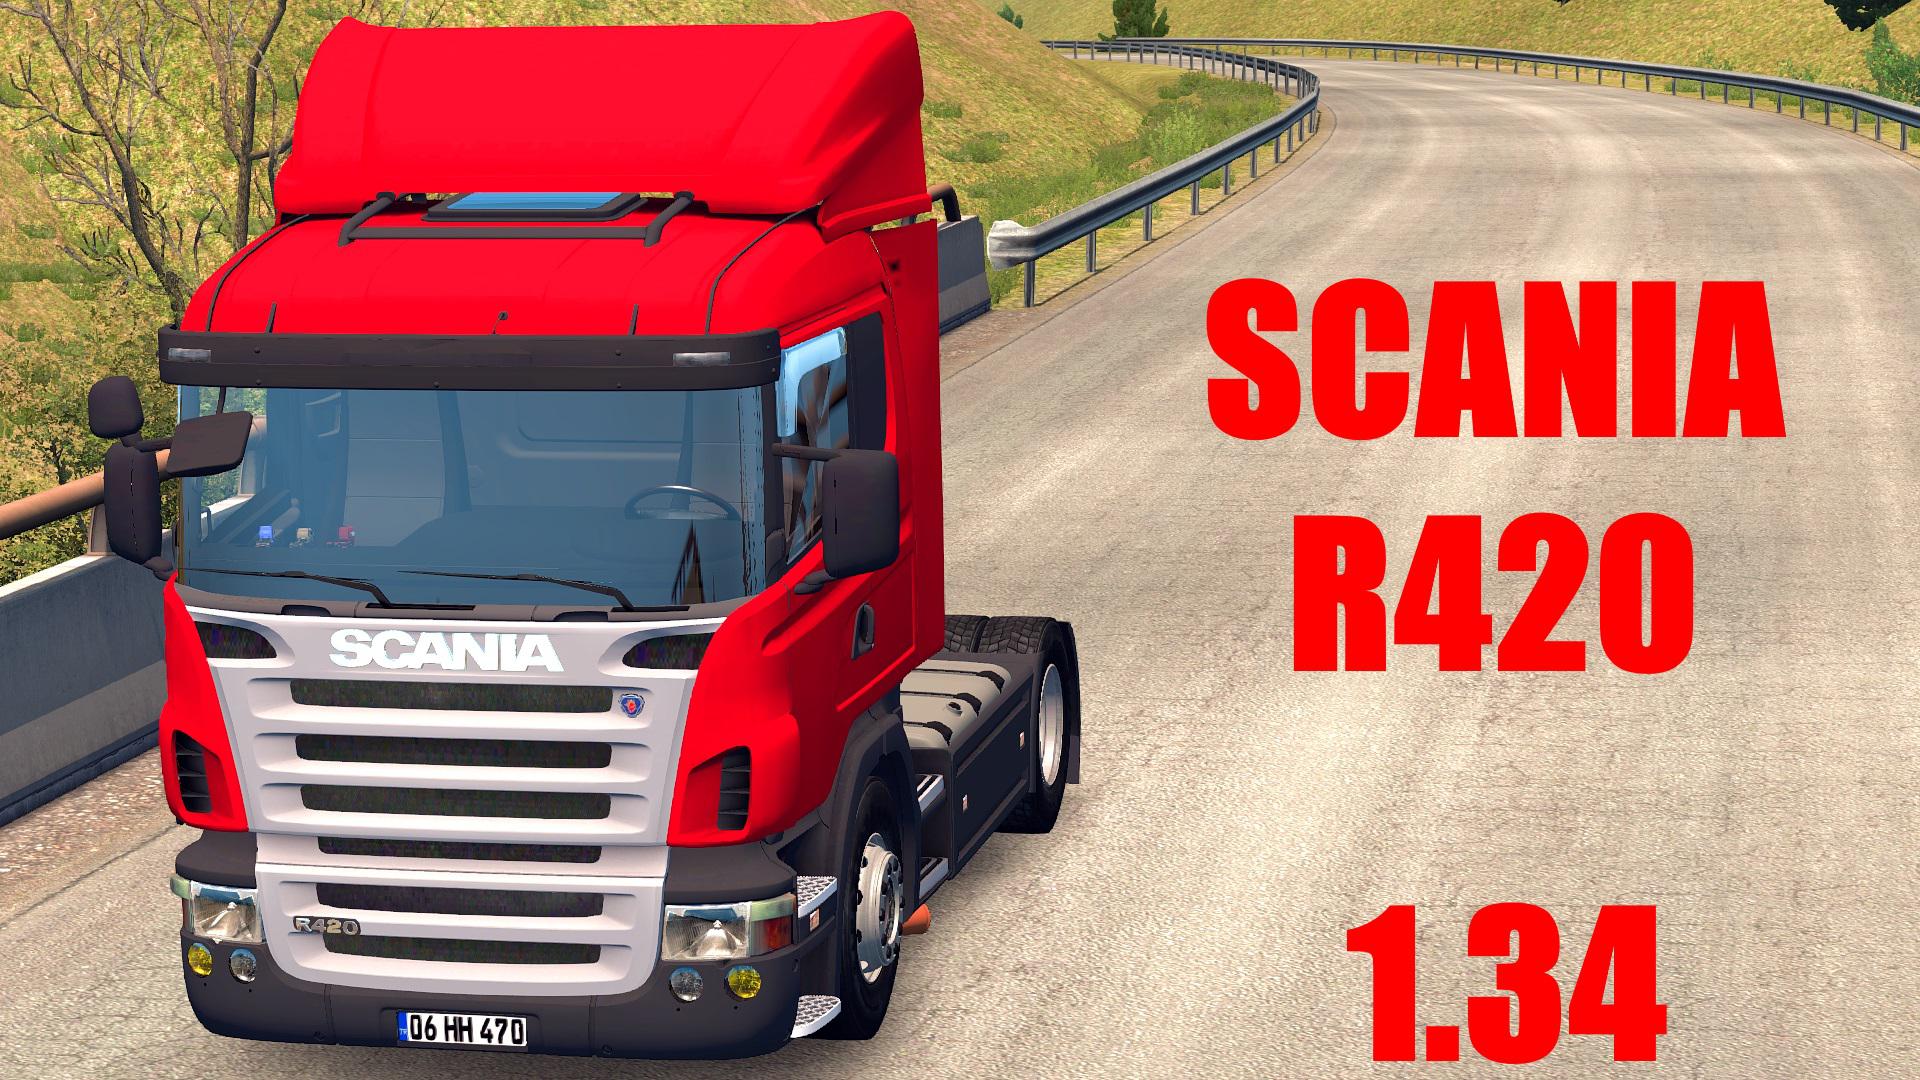 Dealer fix for Scania R420 1.34